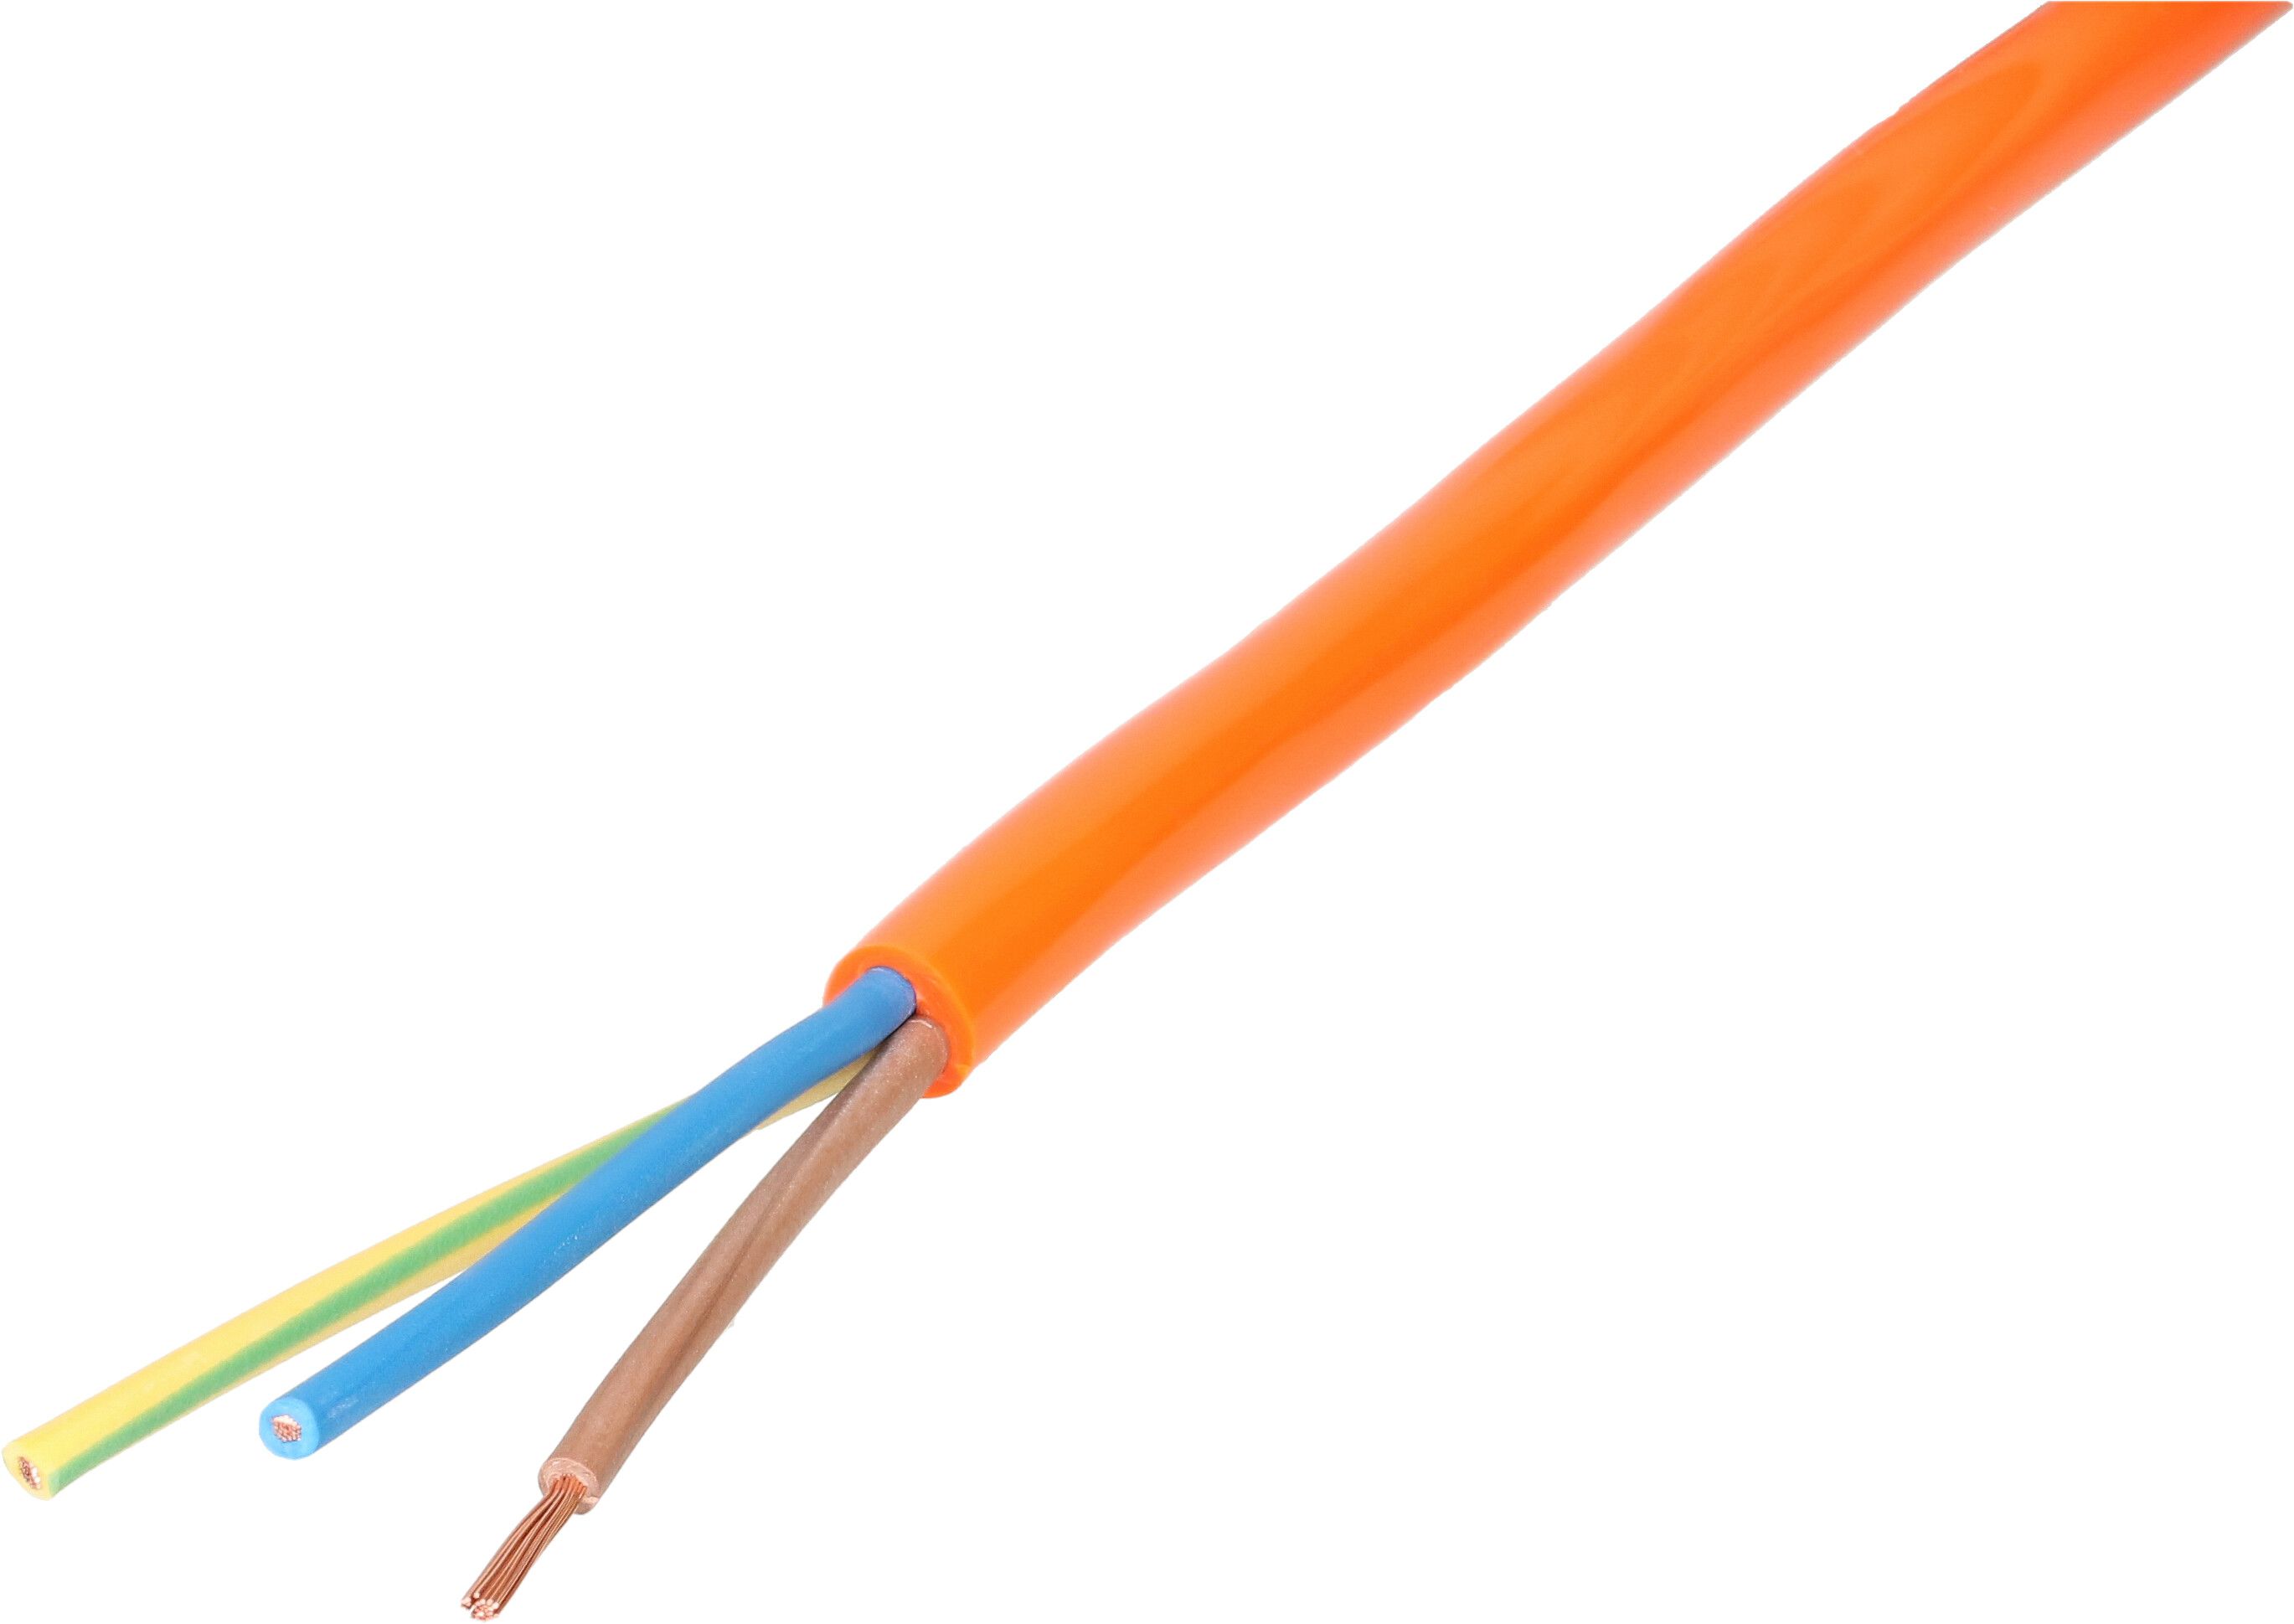 EPR/PUR-Kabel H07BQ-F3G1.5 20m orange - MAX HAURI AG